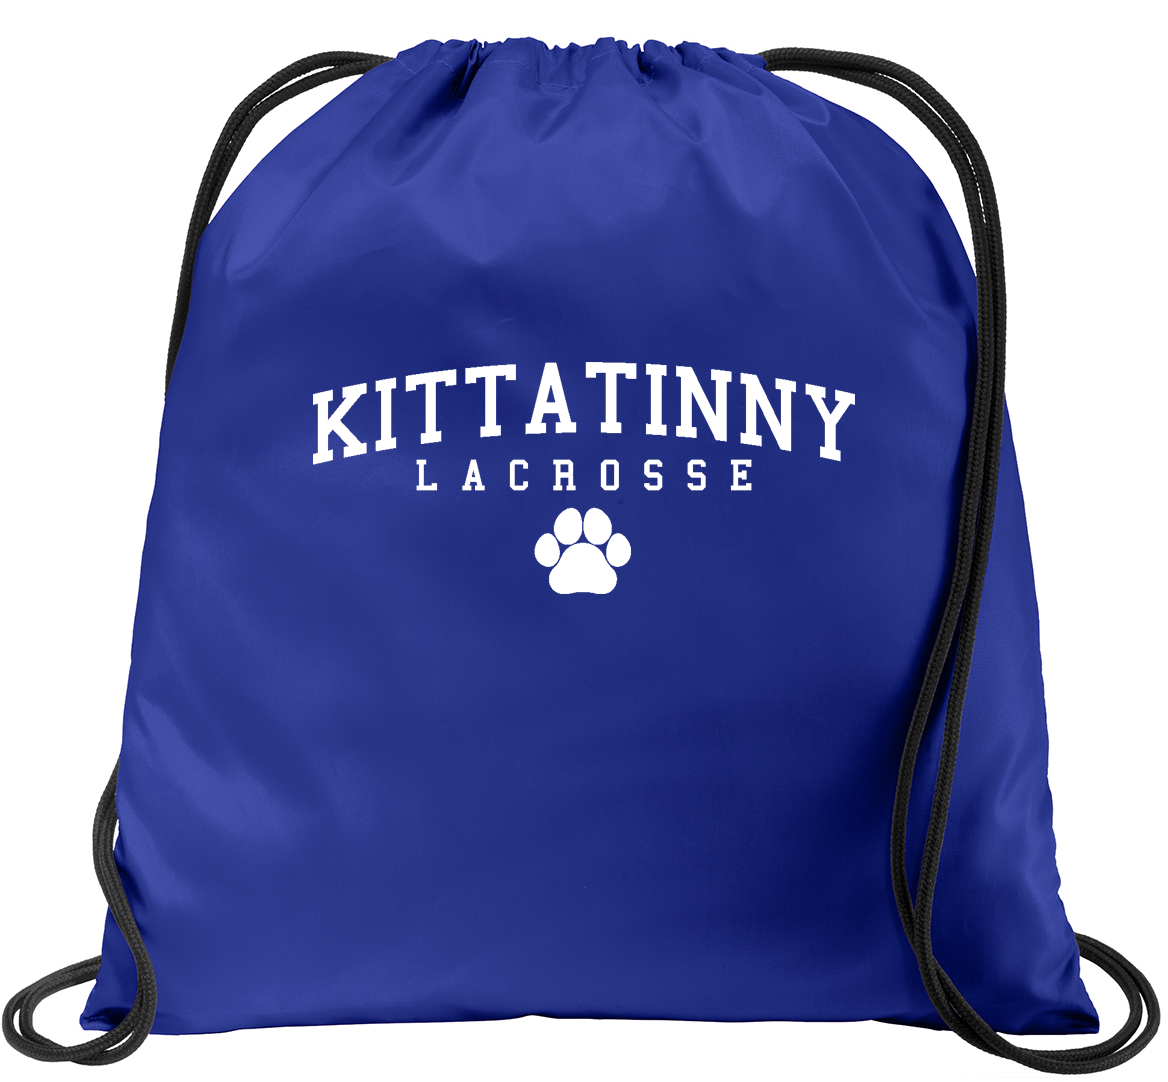 Kittatinny Lacrosse Cinch Pack